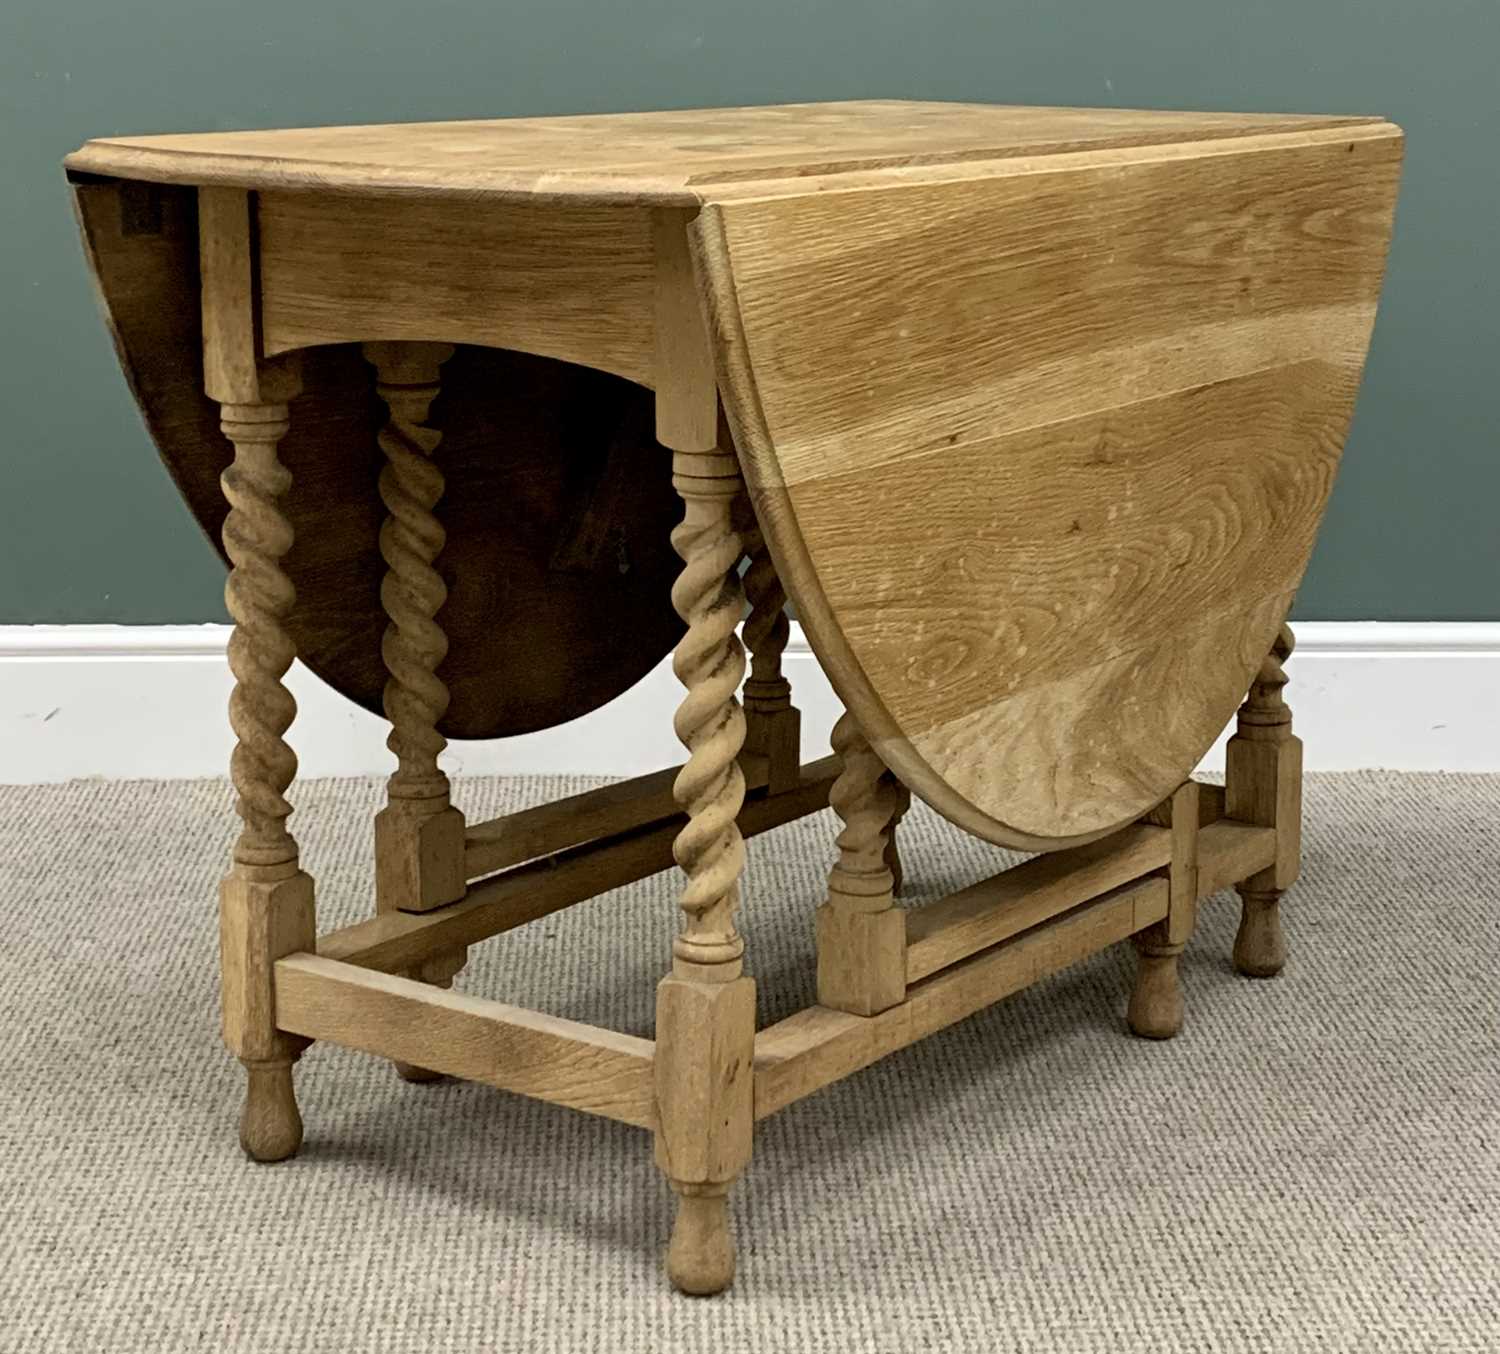 BARLEY TWIST GATE LEG TABLE - bleached oak, 74cms H, 149cms W, 107cms D (open) - Image 3 of 4